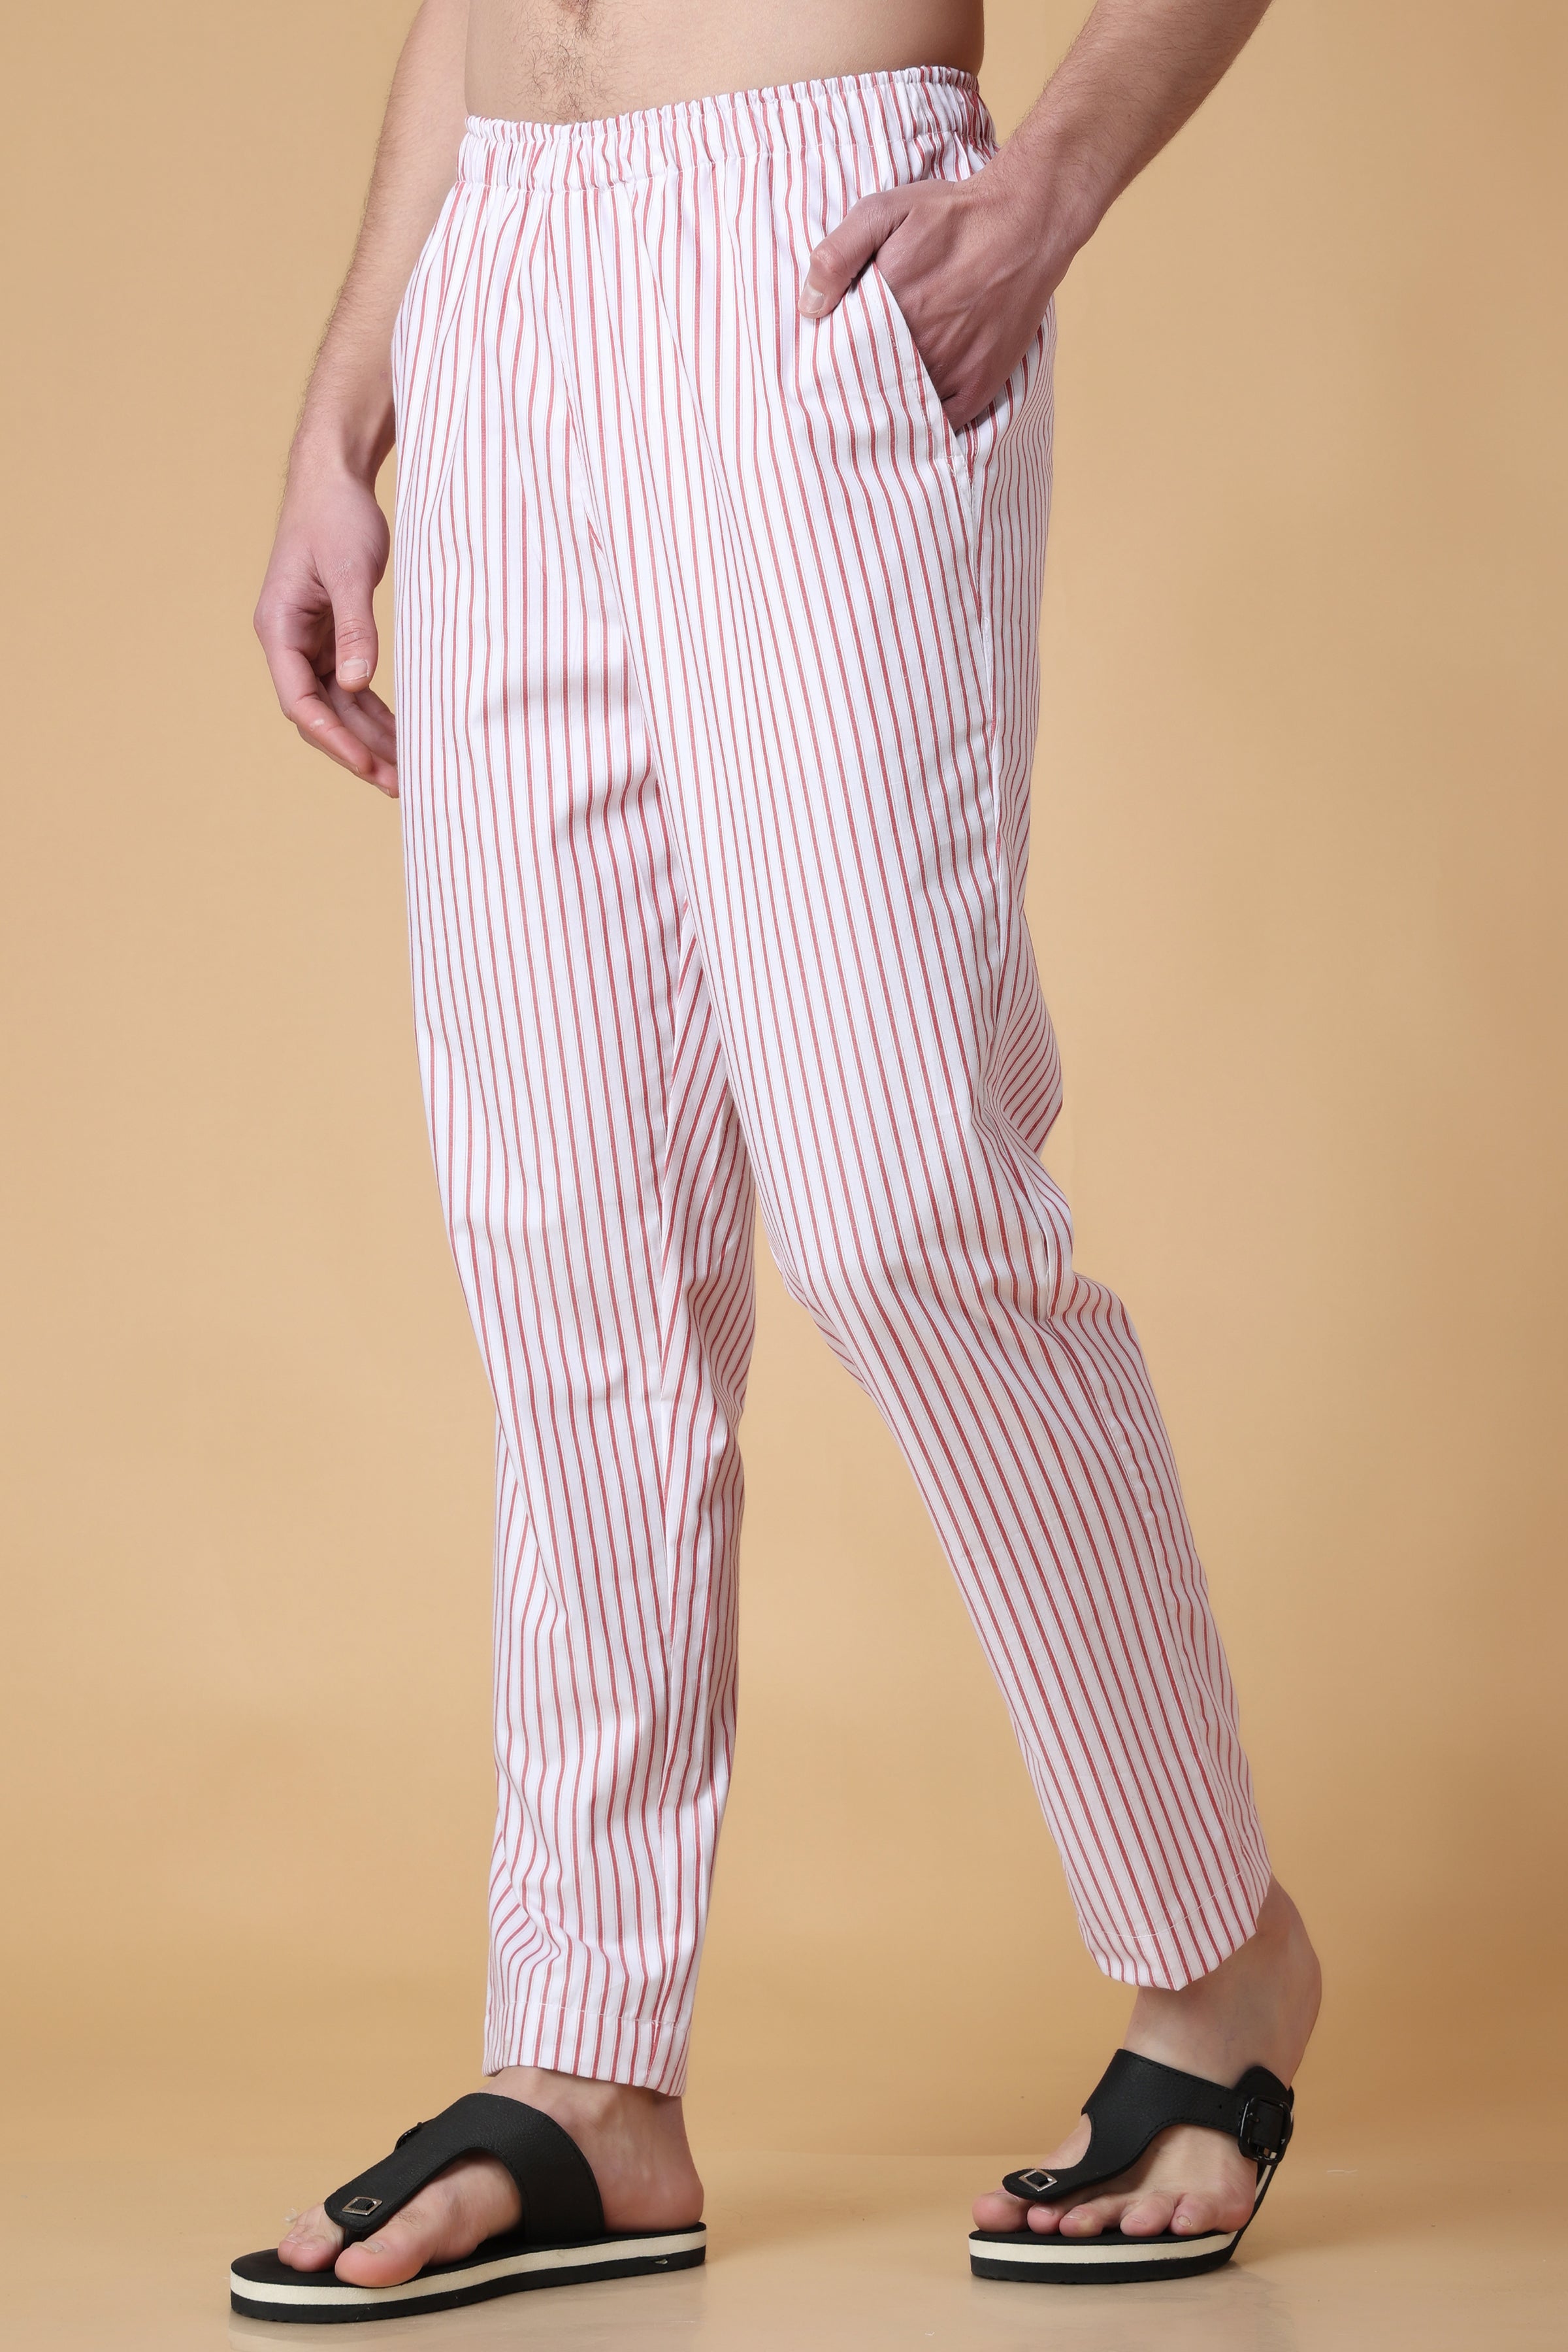 Buy Plus Size Striped Pyjama Pants  Plus Size Men Pyjamas  Apella